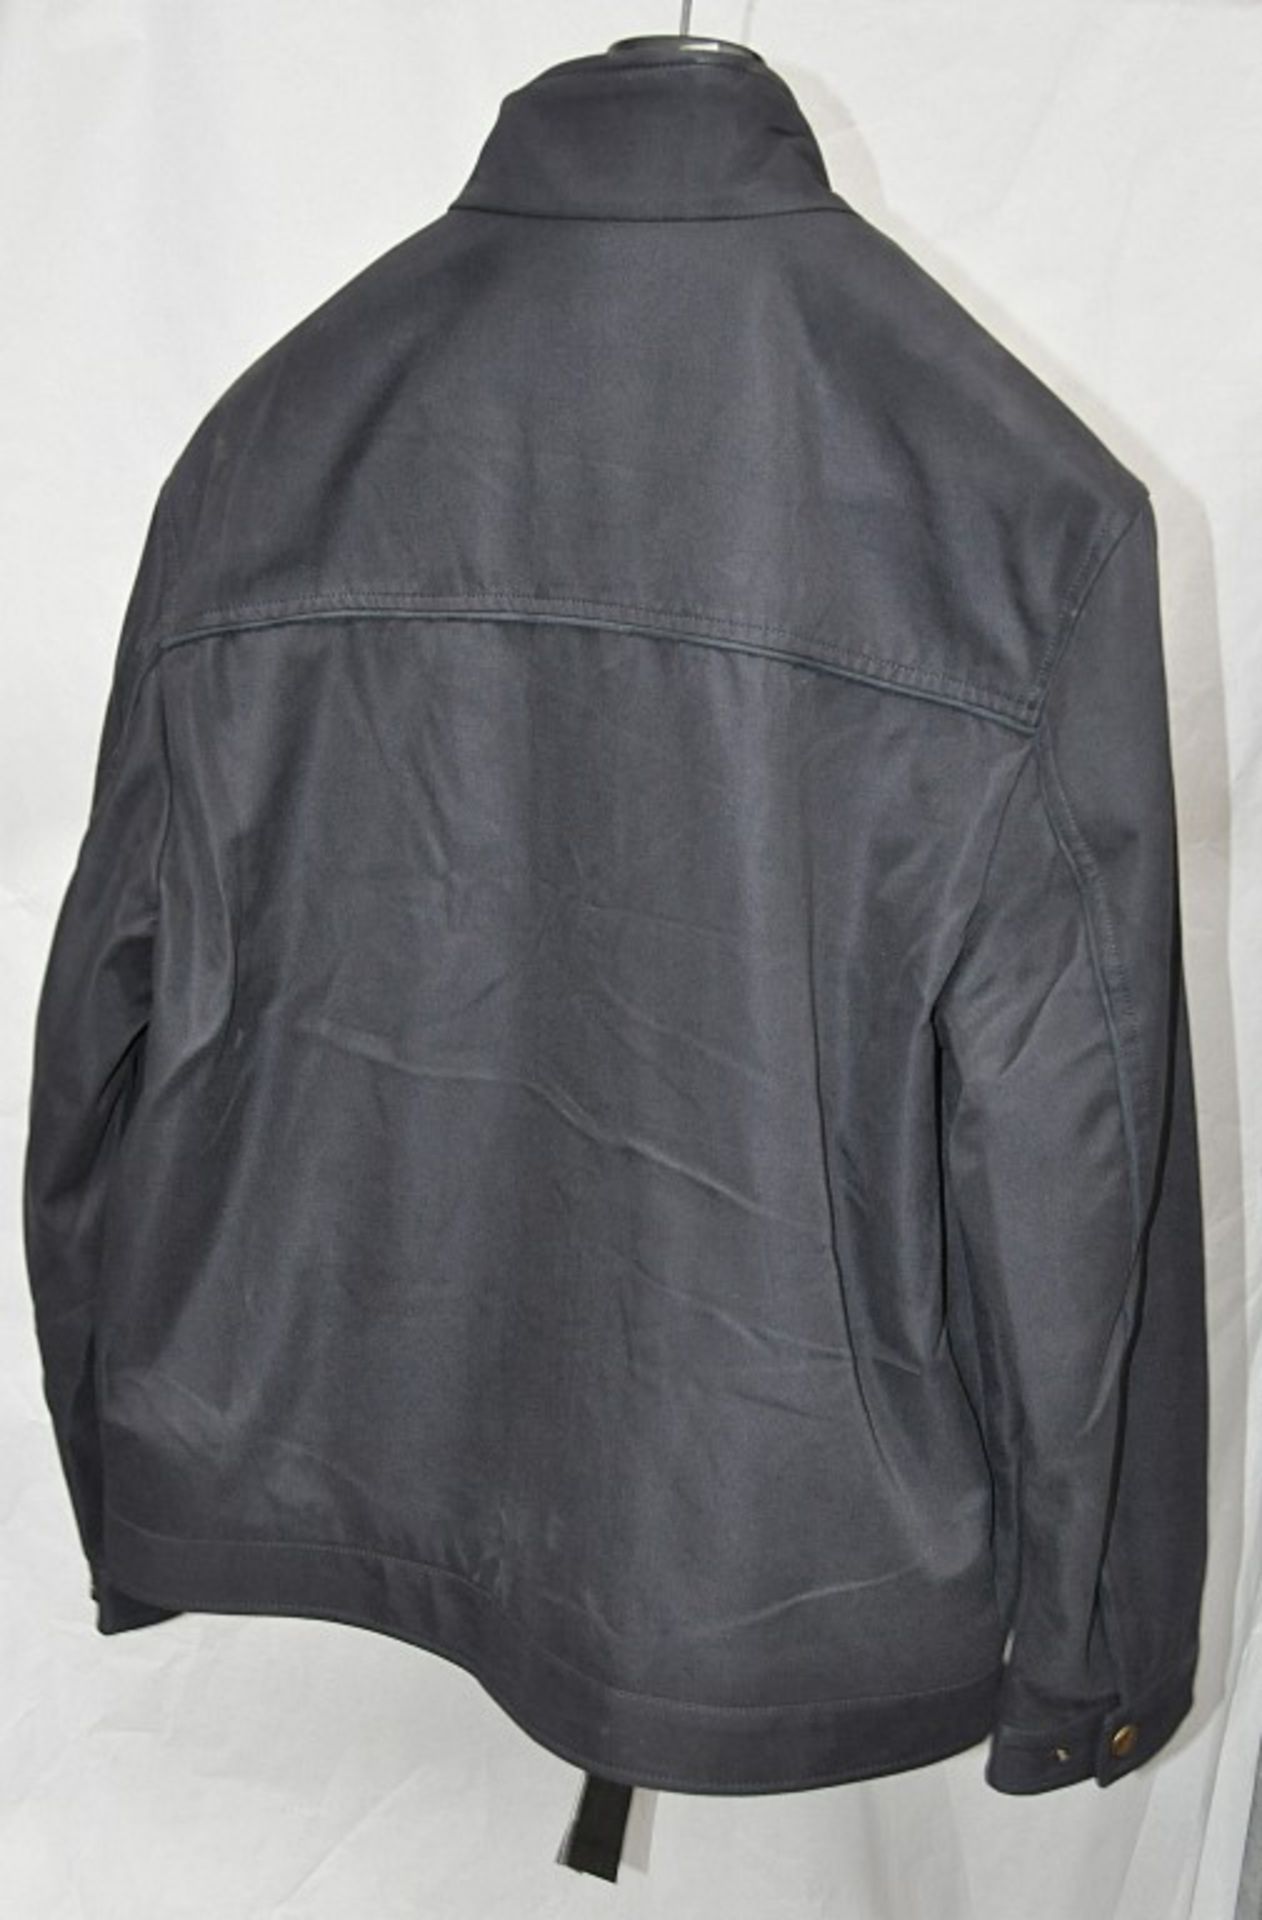 1 x Men's Long Sleeve Casual Jacket By International Luxury Brand "Vasto" (BAJ72241) – Size: - Image 2 of 6